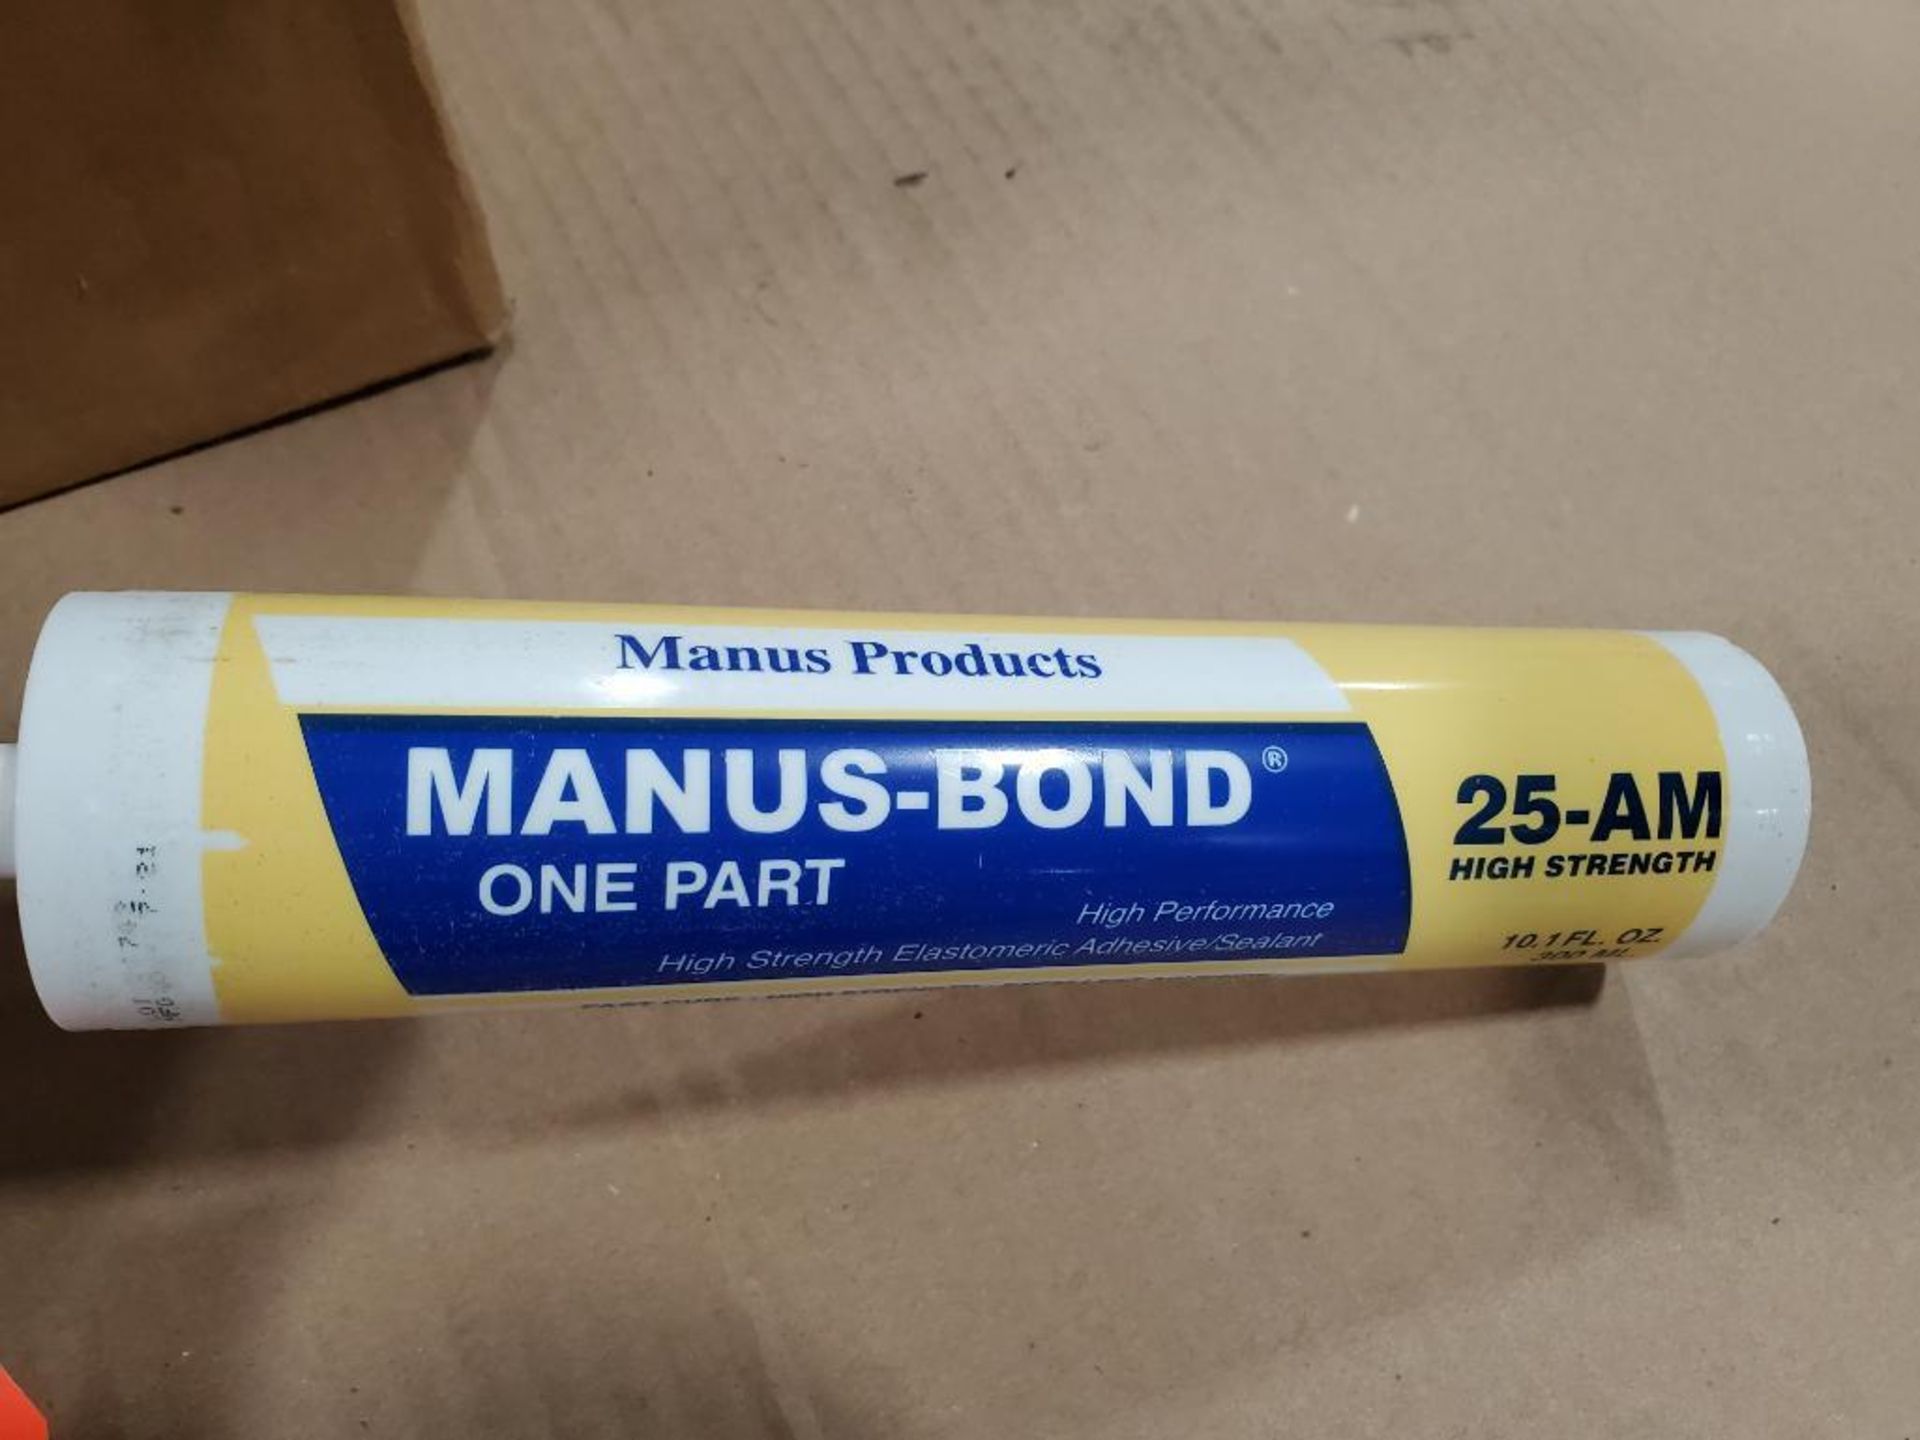 Qty 30 - Manus Products 25-AM Manus-Bond sealant. 10.1 Fl Oz tube. New in box. - Image 3 of 3